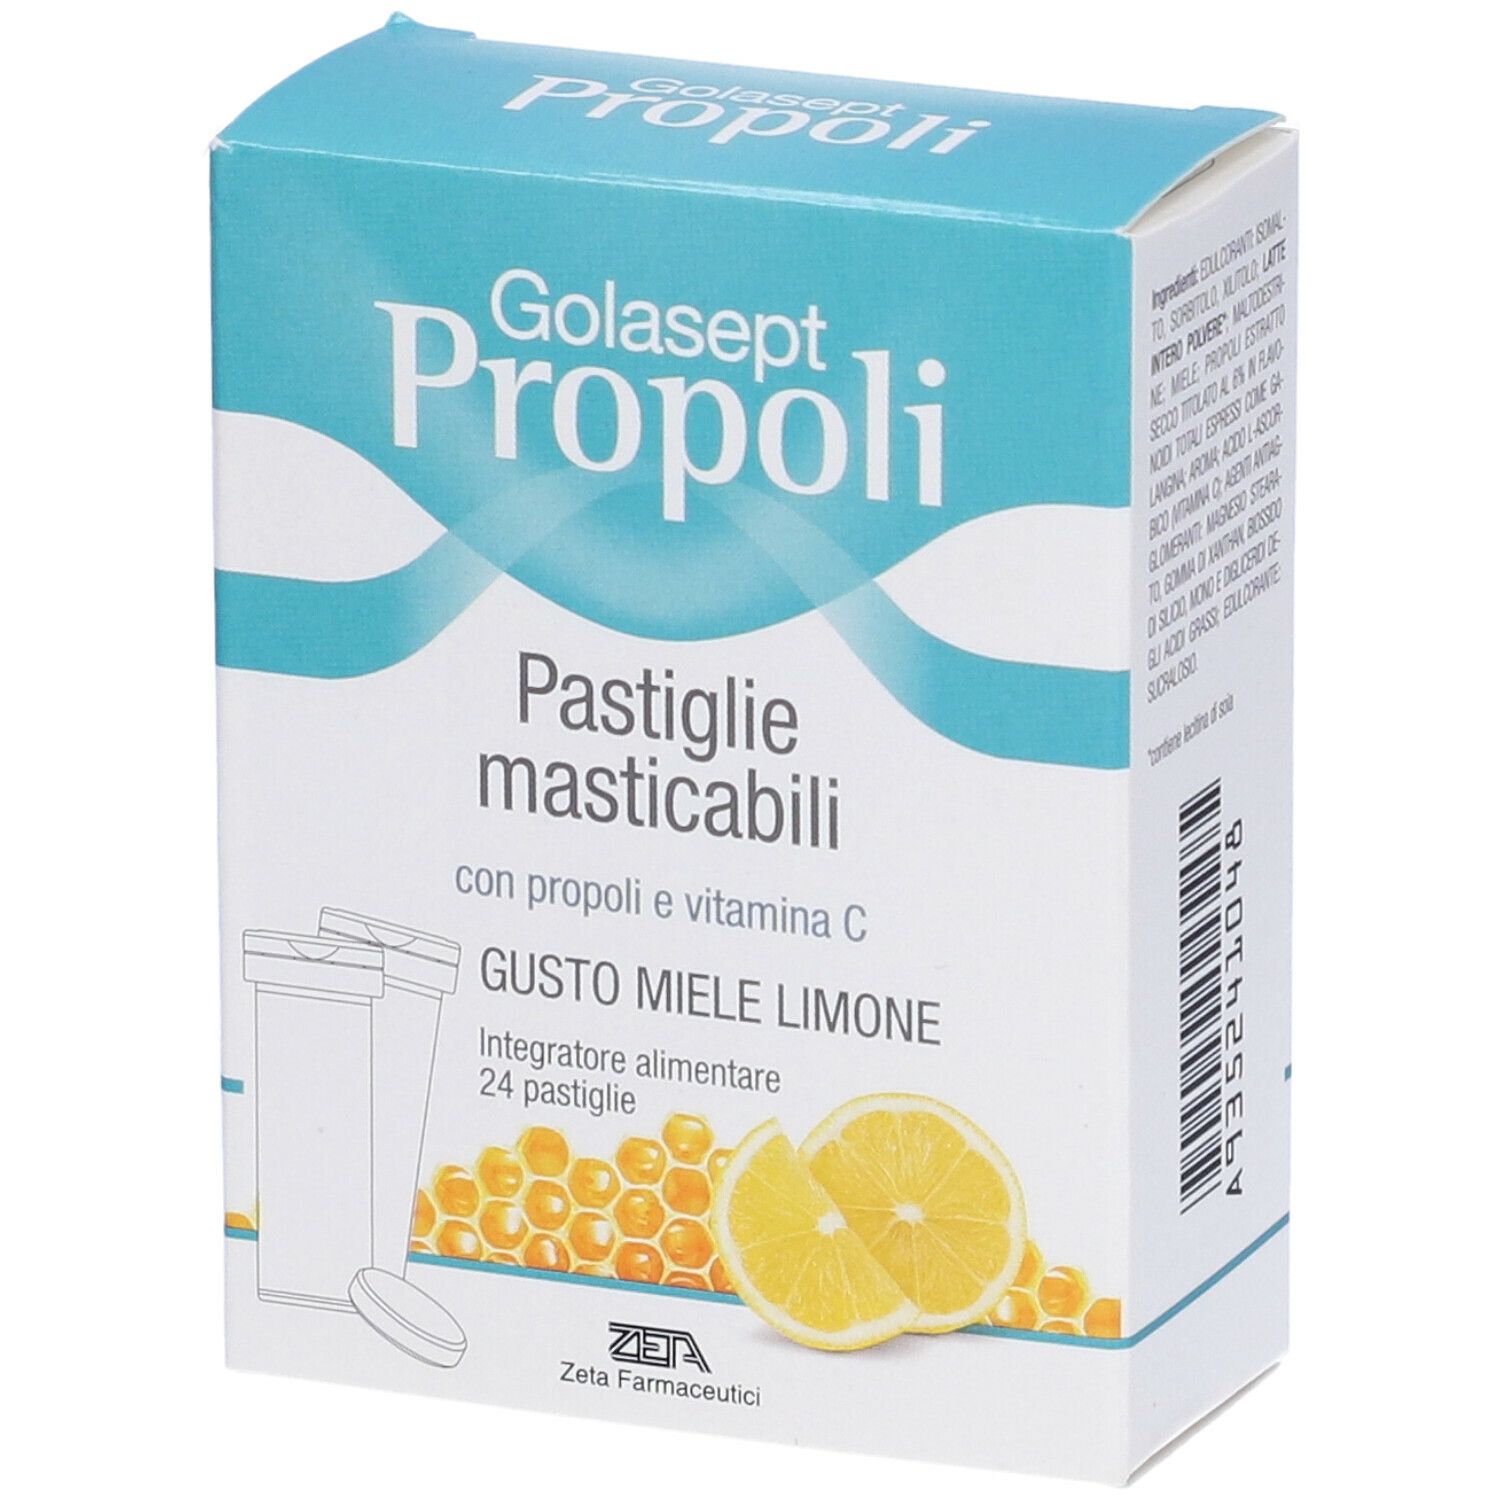 Zeta Farmaceutici Golasept Propoli Pastiglie masticabili